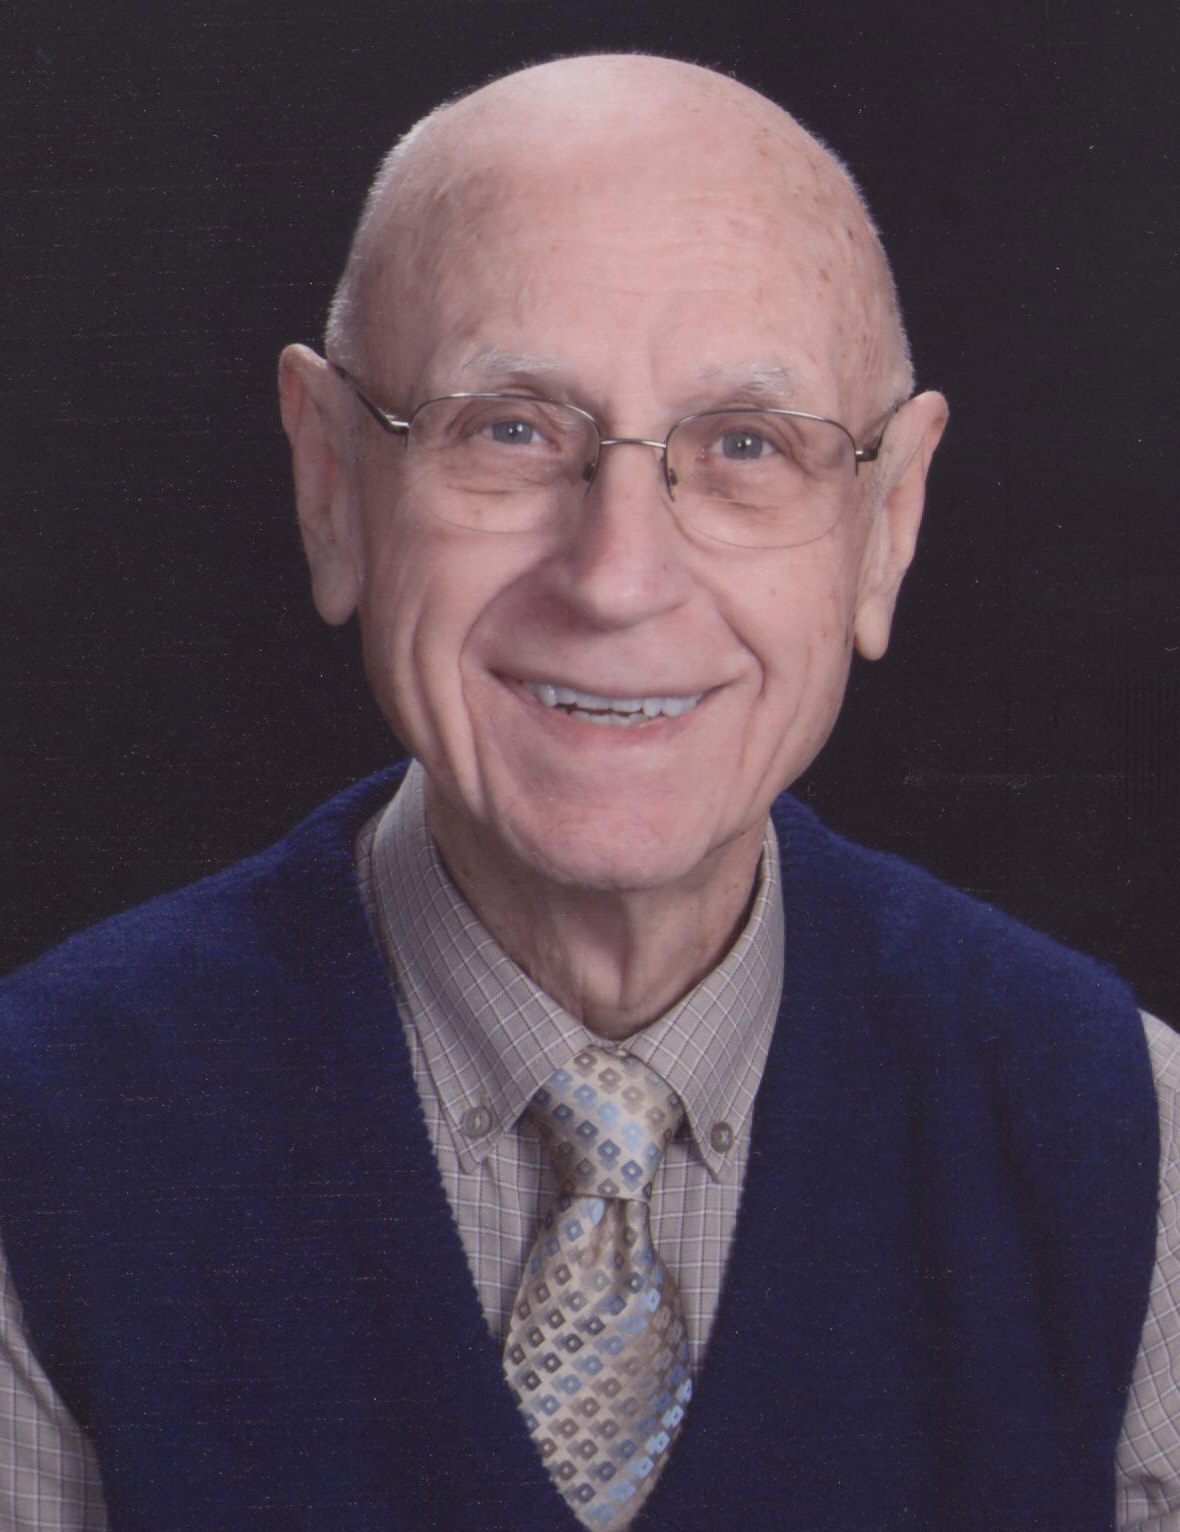 Obituary information for Robert Ralph "Bob" Steck